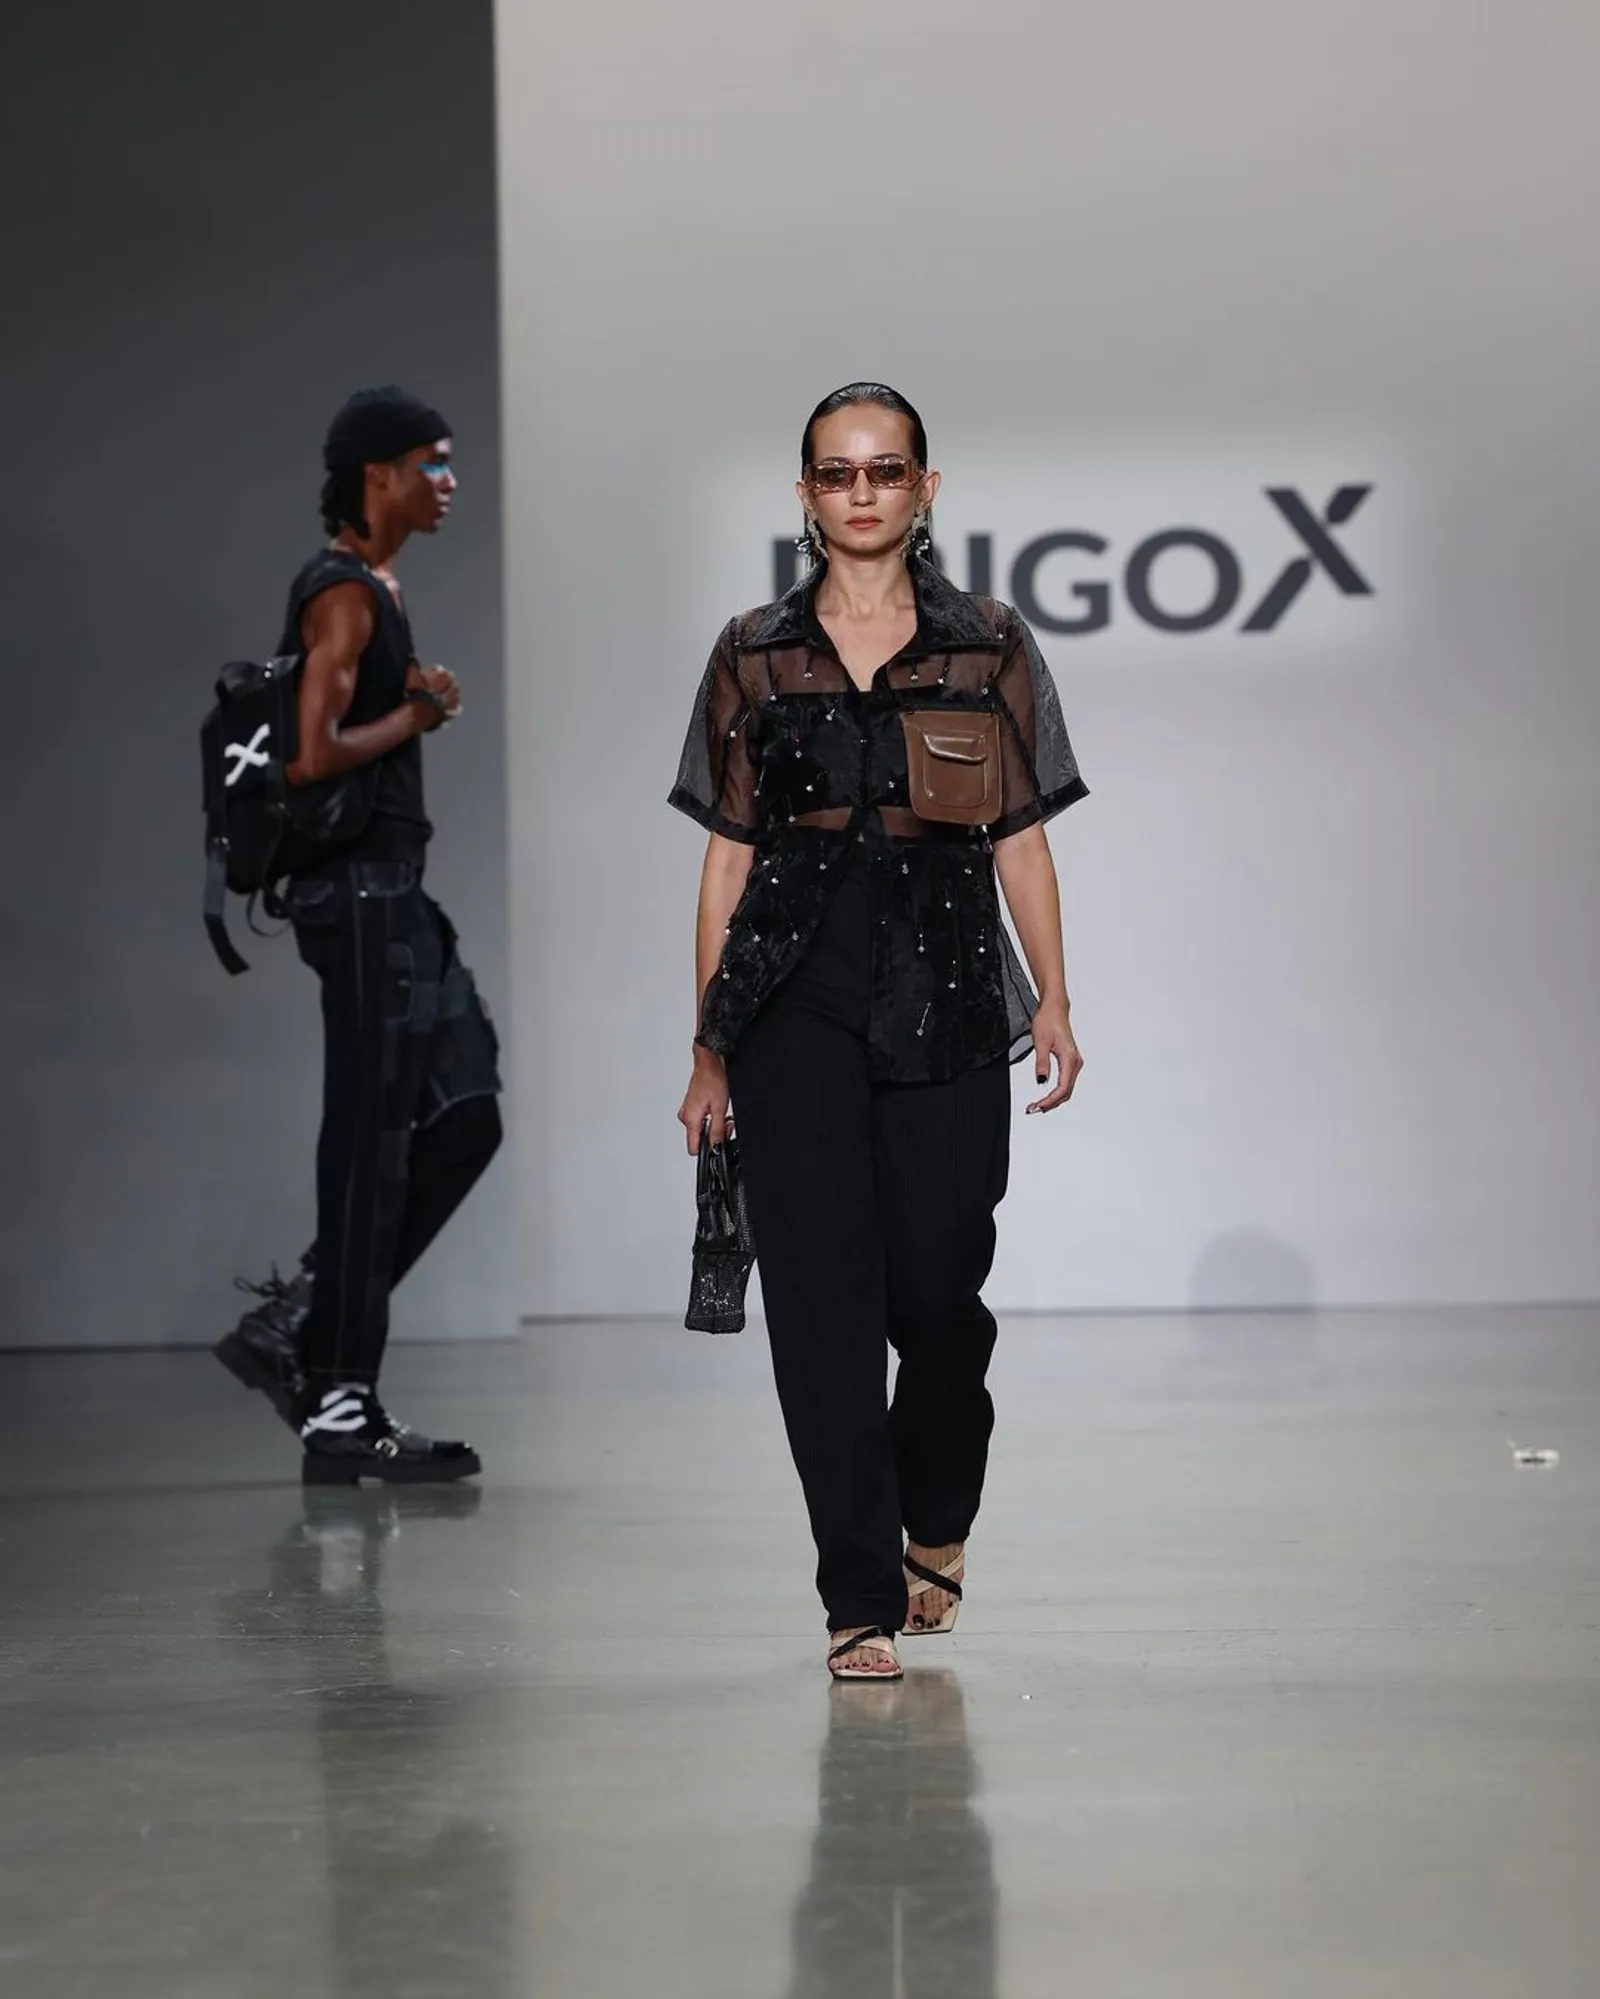 Gaya Para Artis Indonesia di Runway ERIGO-X New York Fashion Week